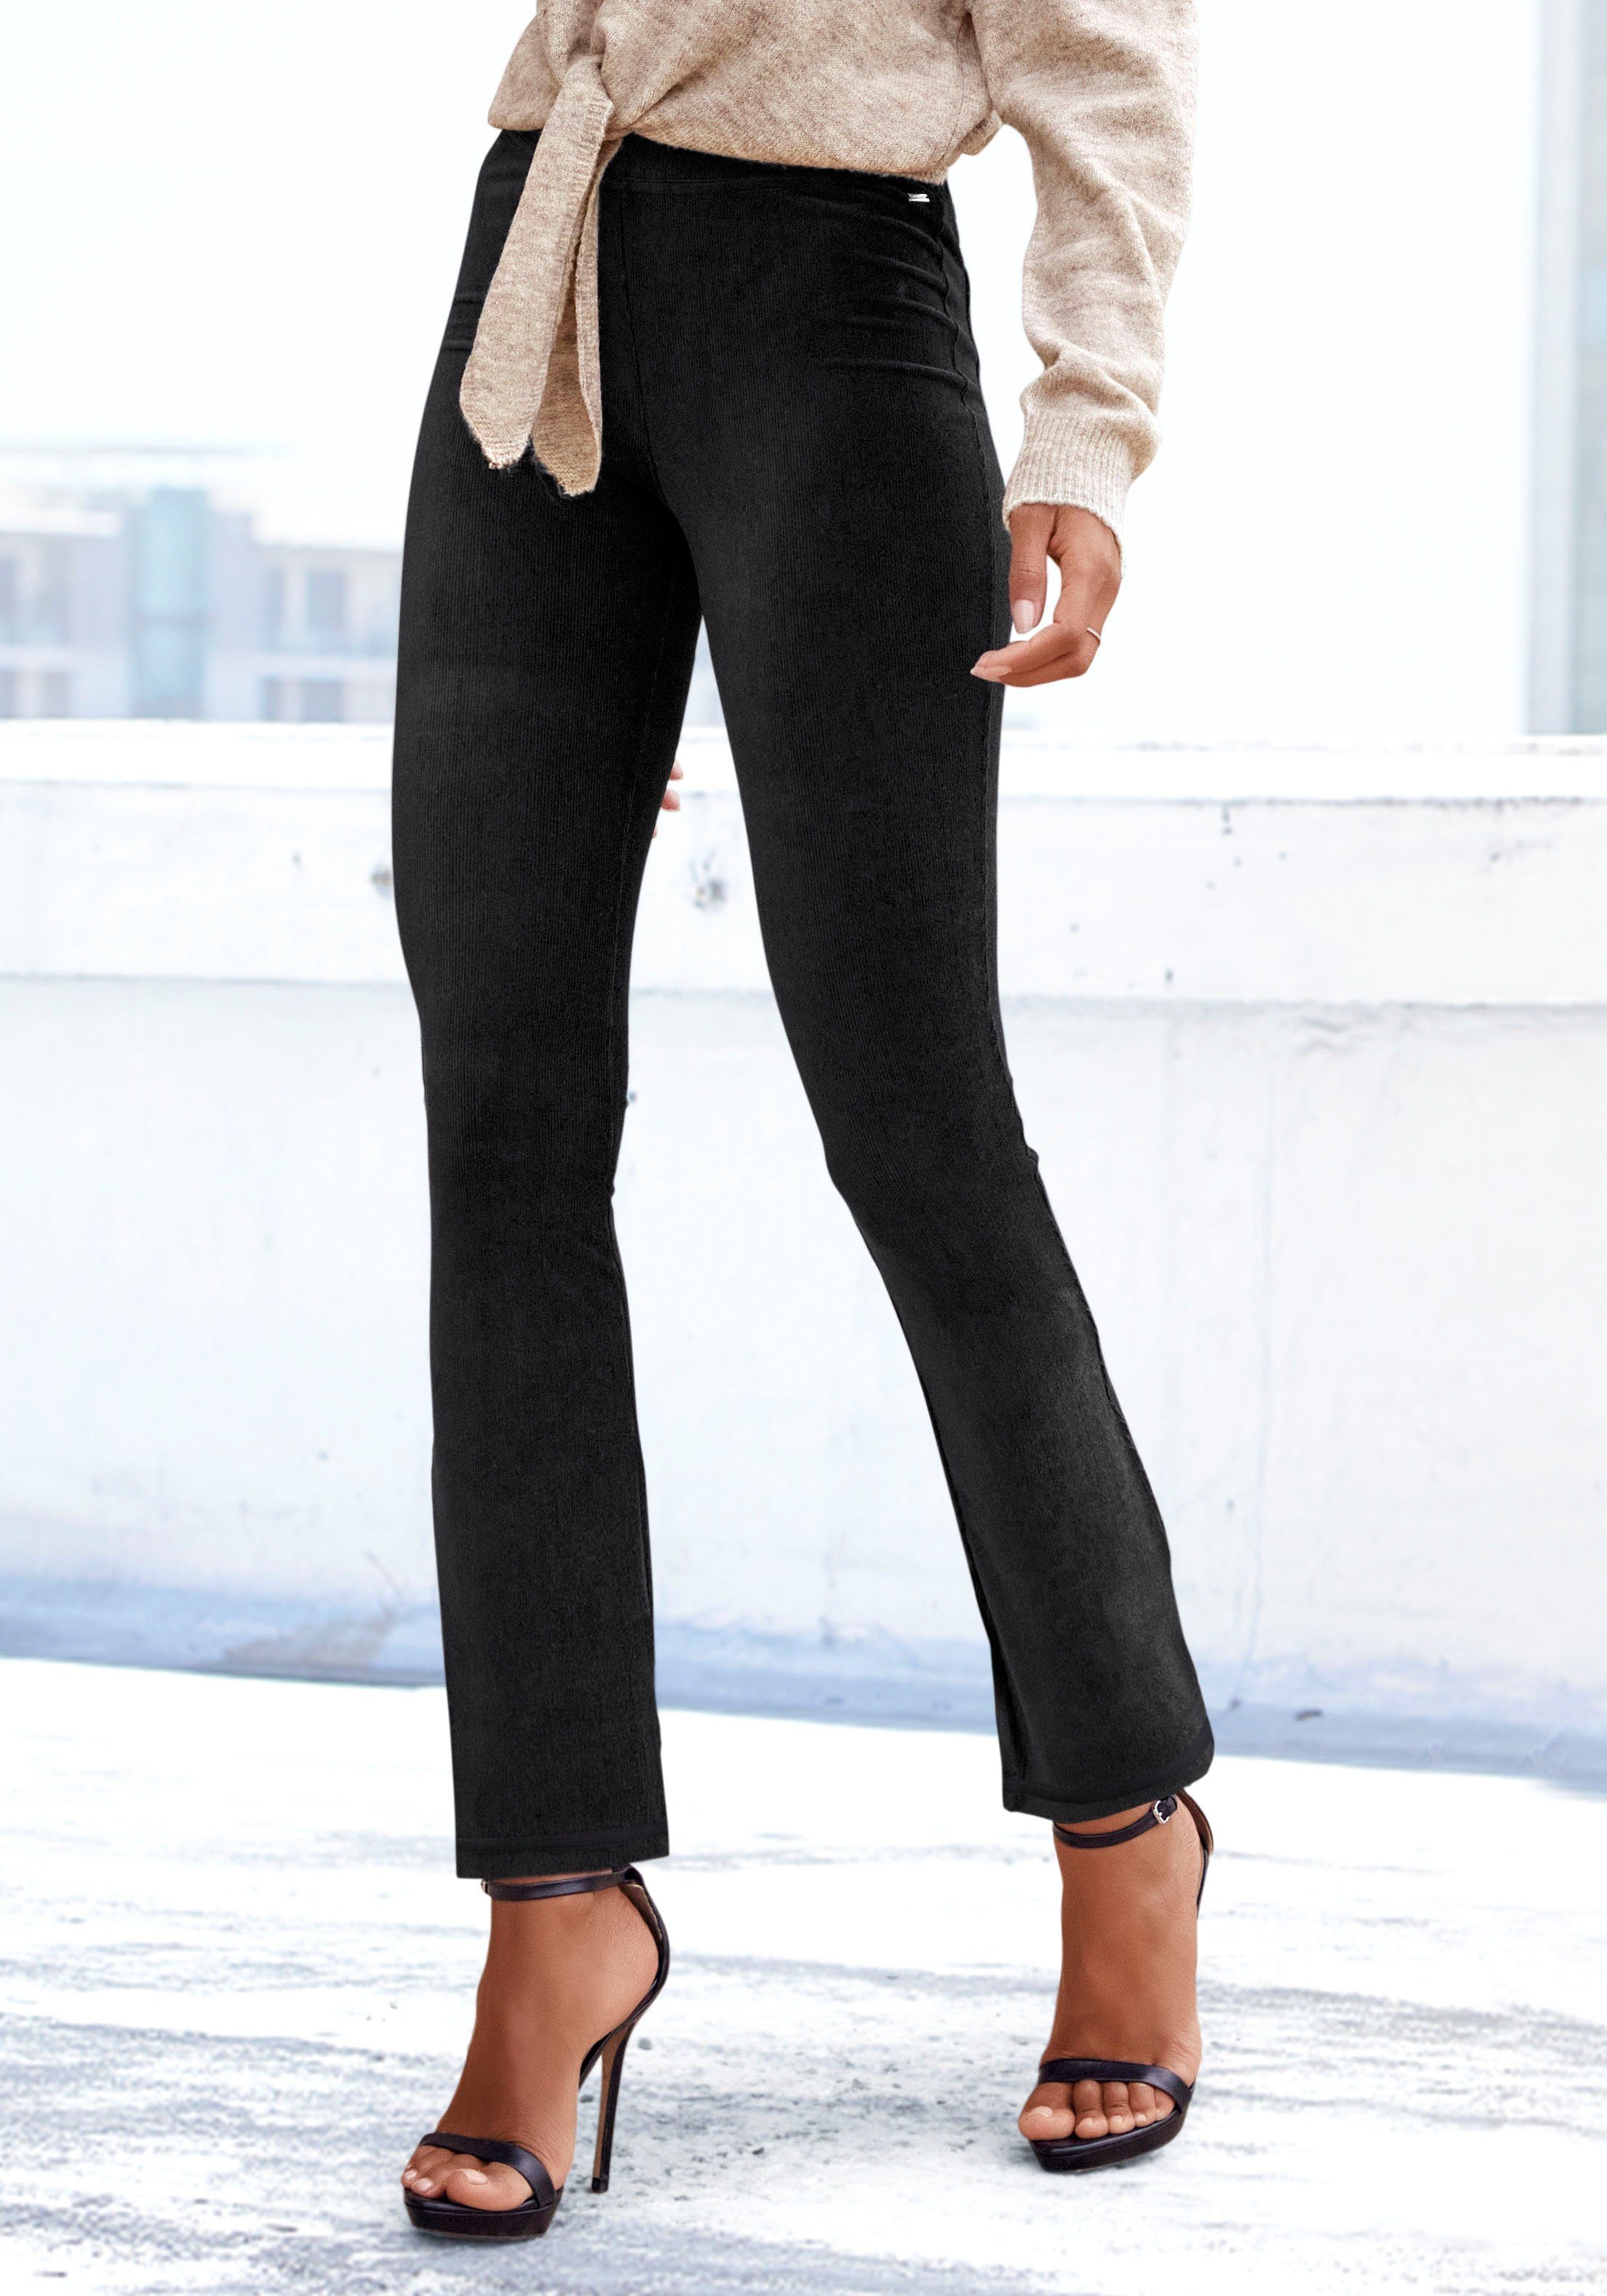 LASCANA Jazzpants aus weichem Cord-Optik, schwarz in Loungewear Material